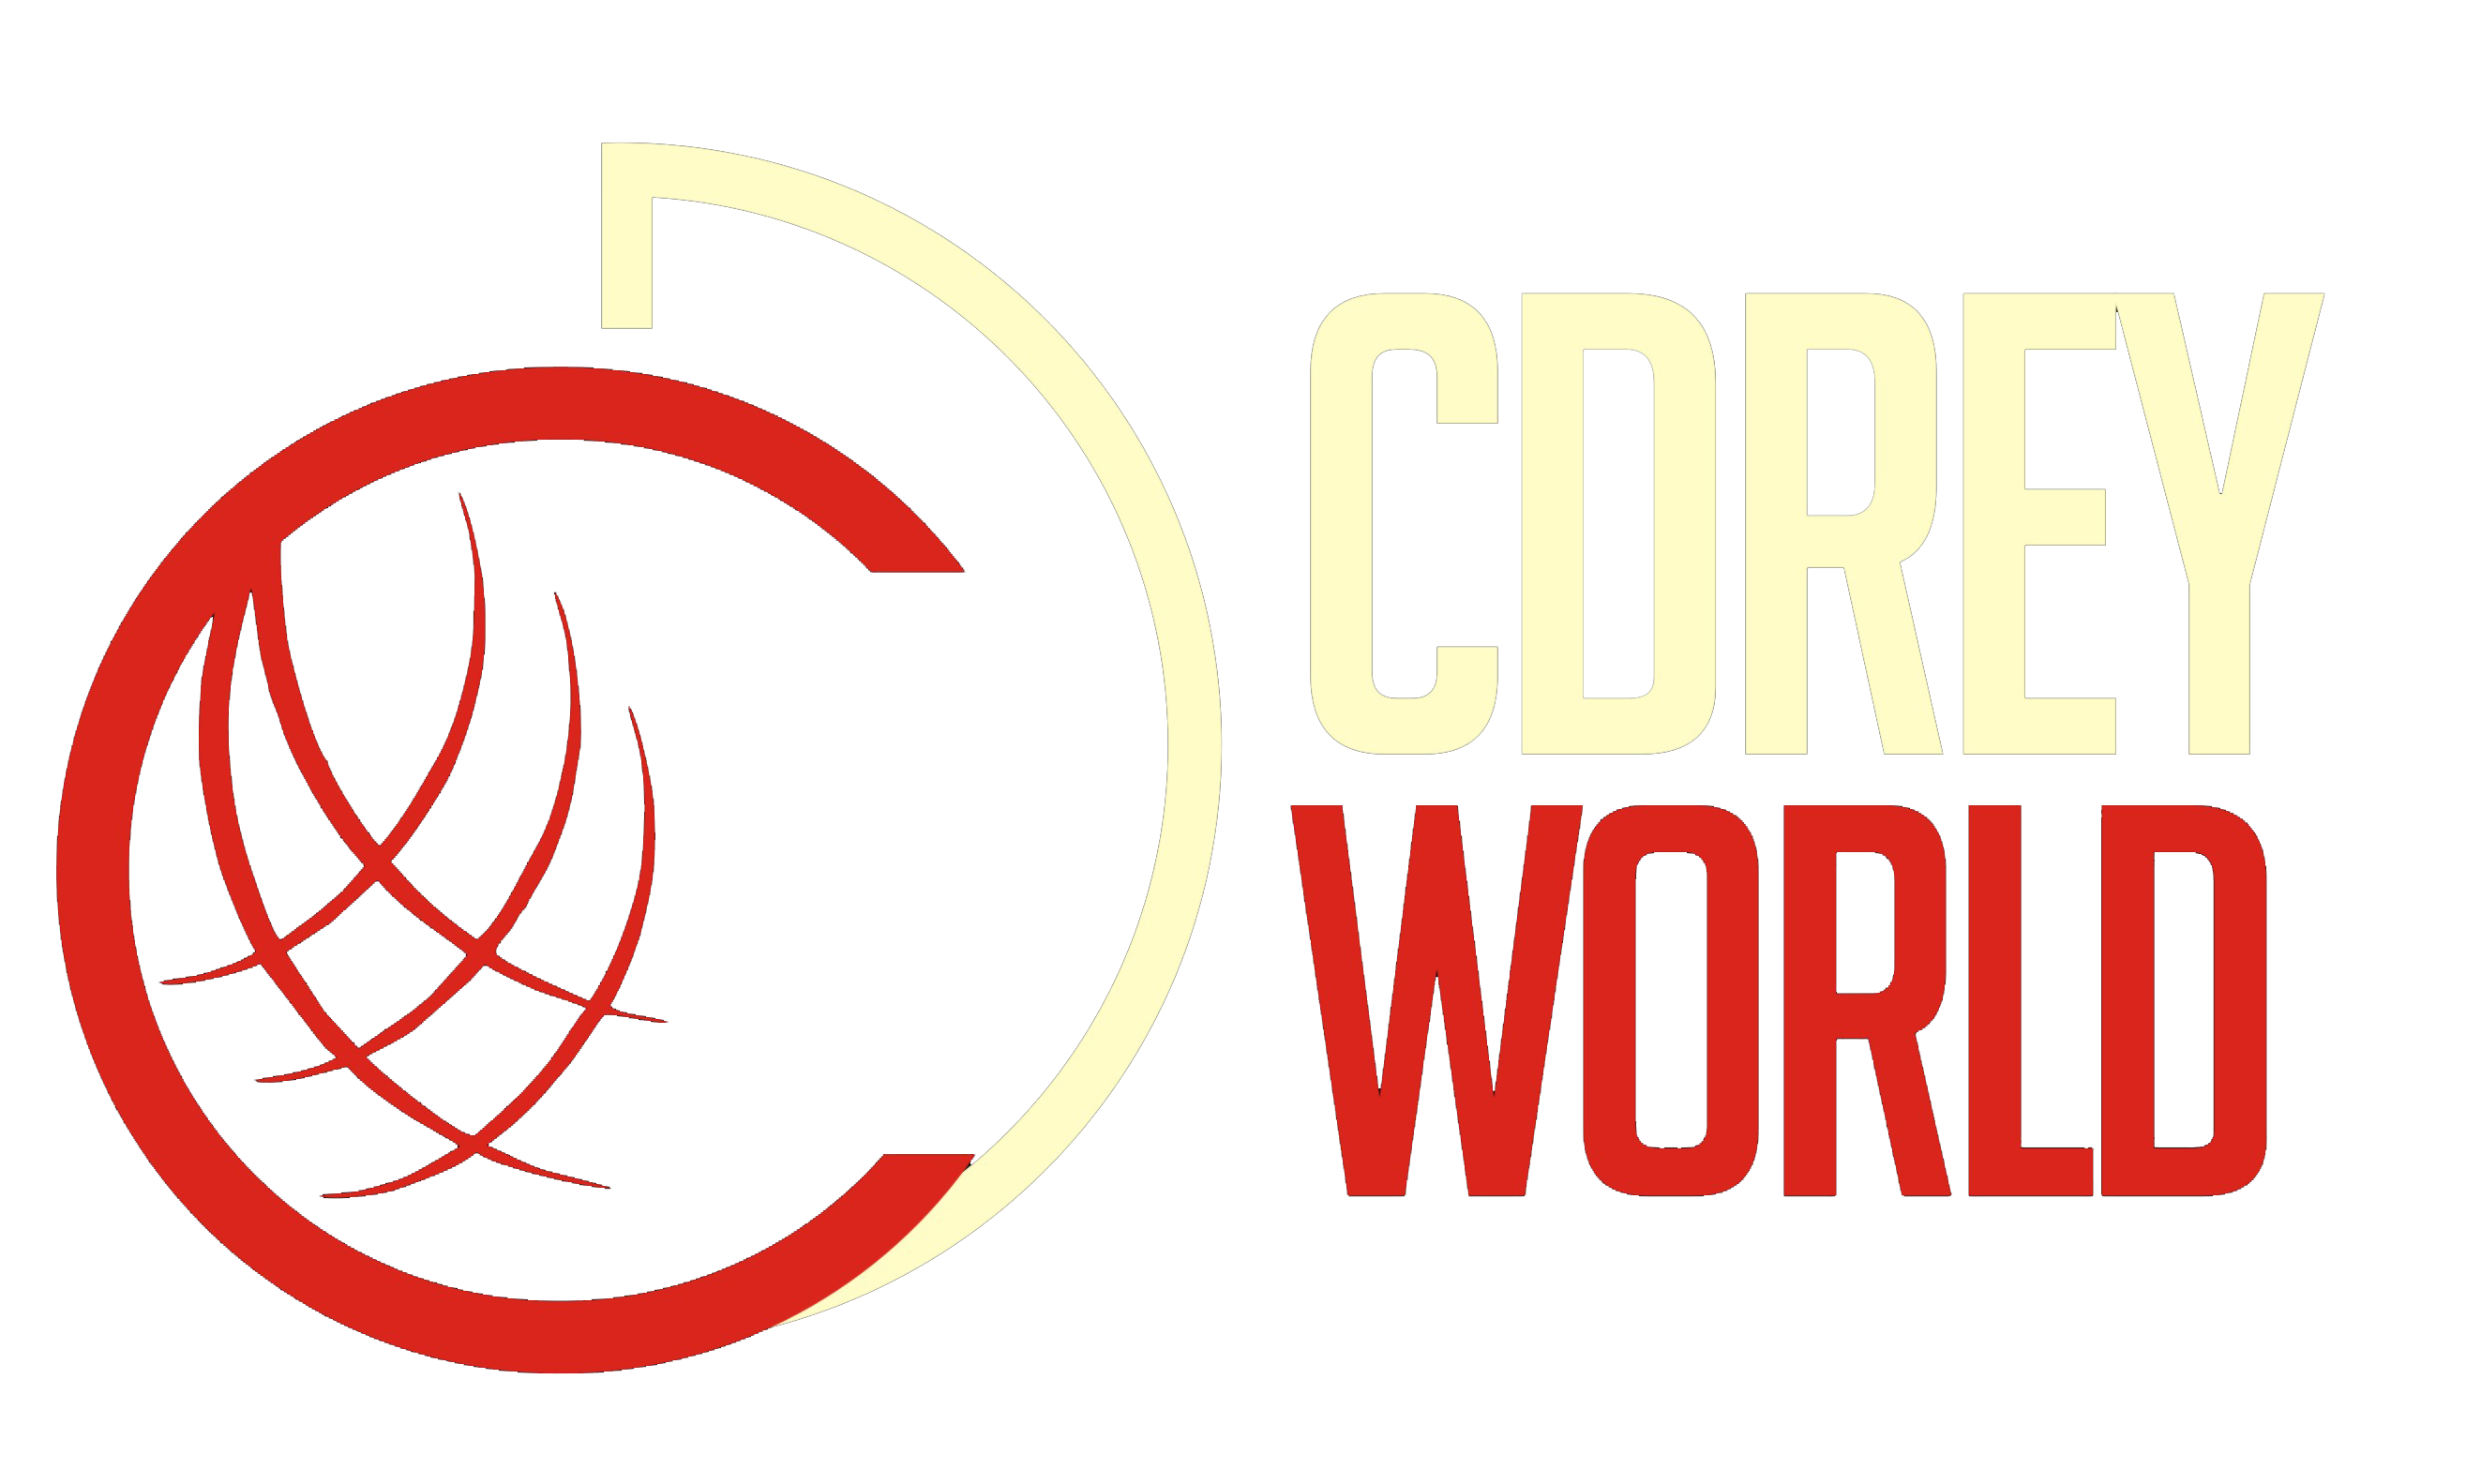 CDrey World